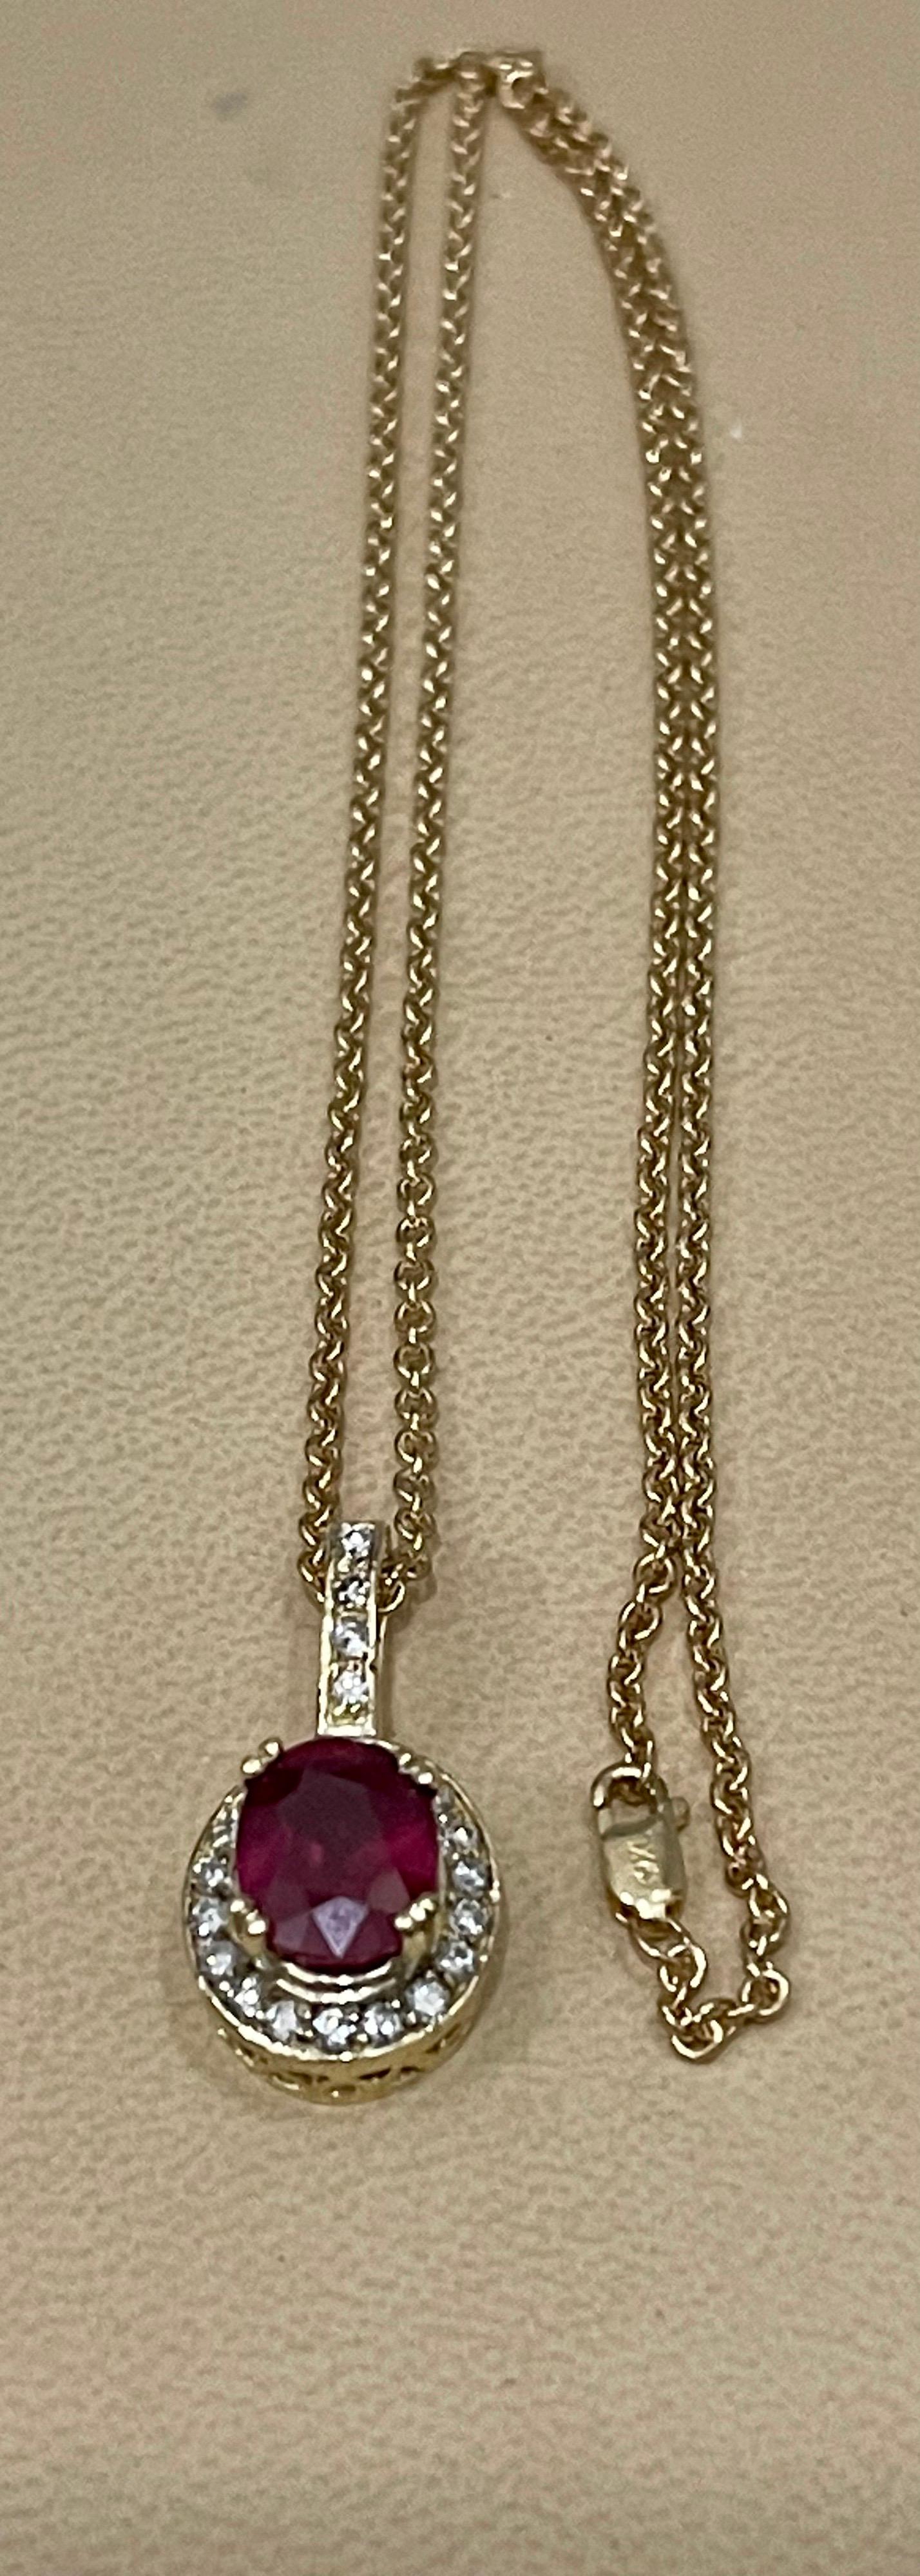 3.5 Carat Oval Cut Ruby Pendant with Diamonds 14 Karat Yellow Gold Chain 3